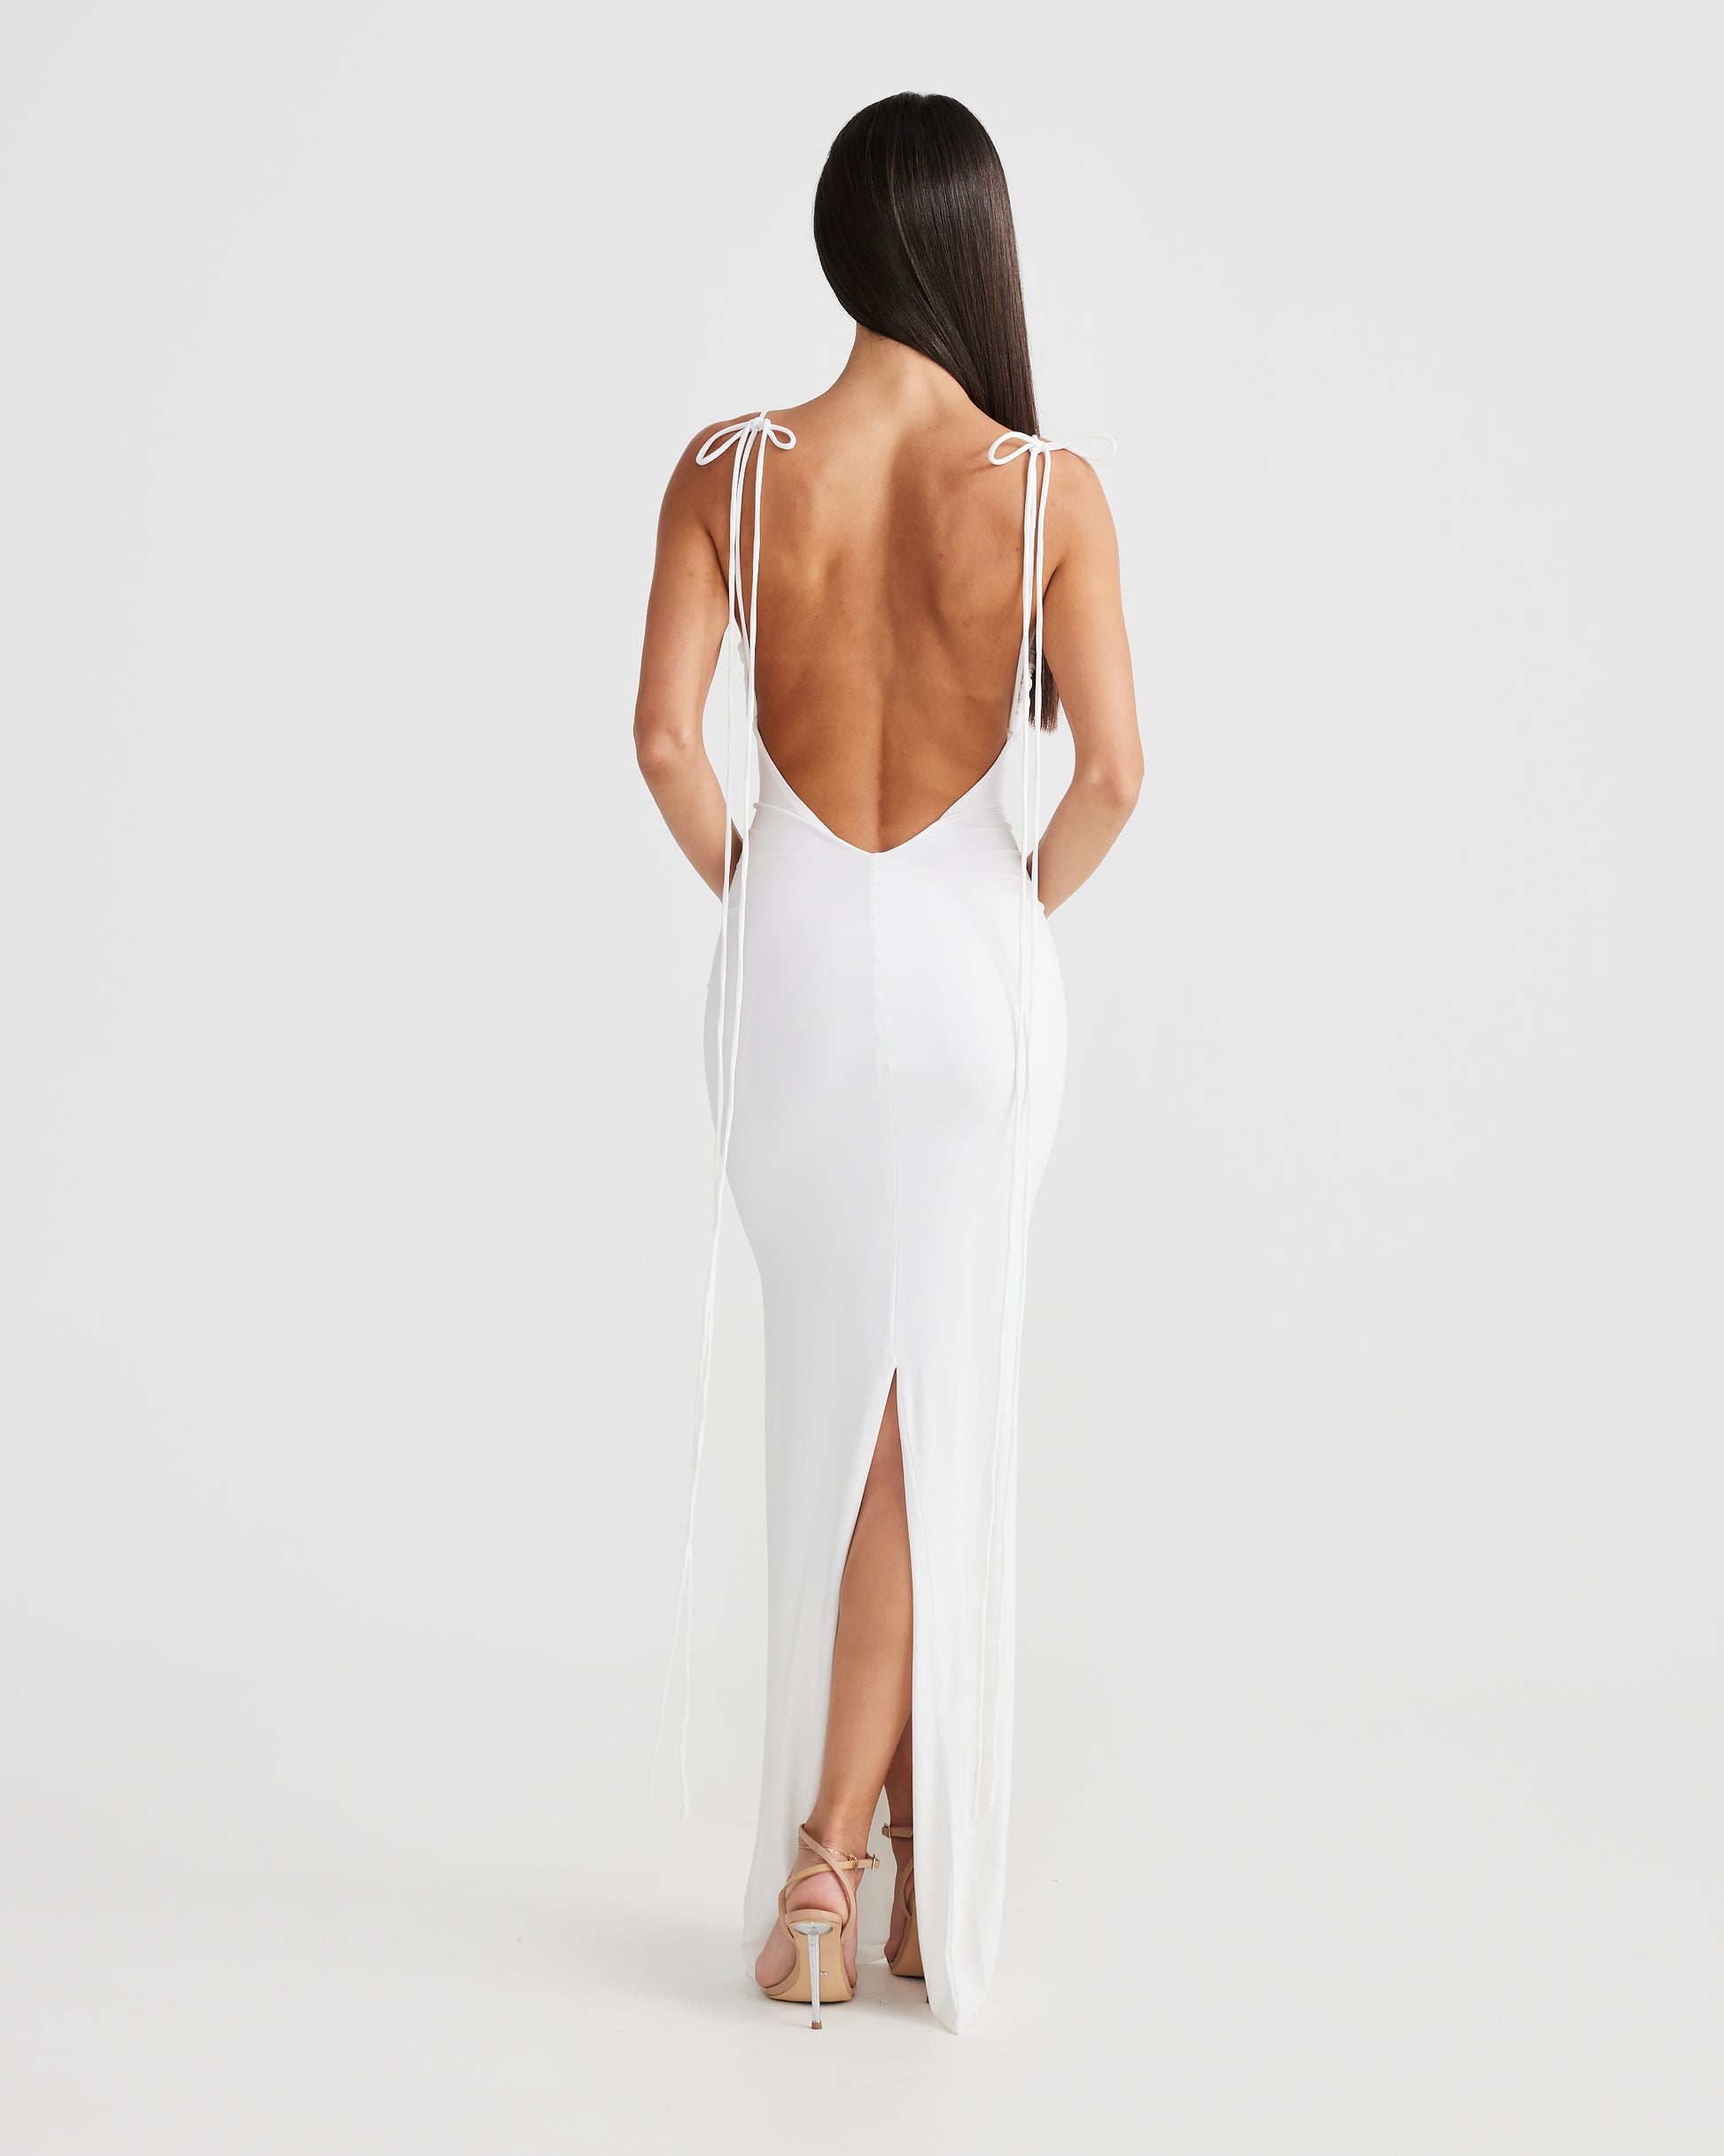 MÉLANI The Label NATALI White Backless Dress